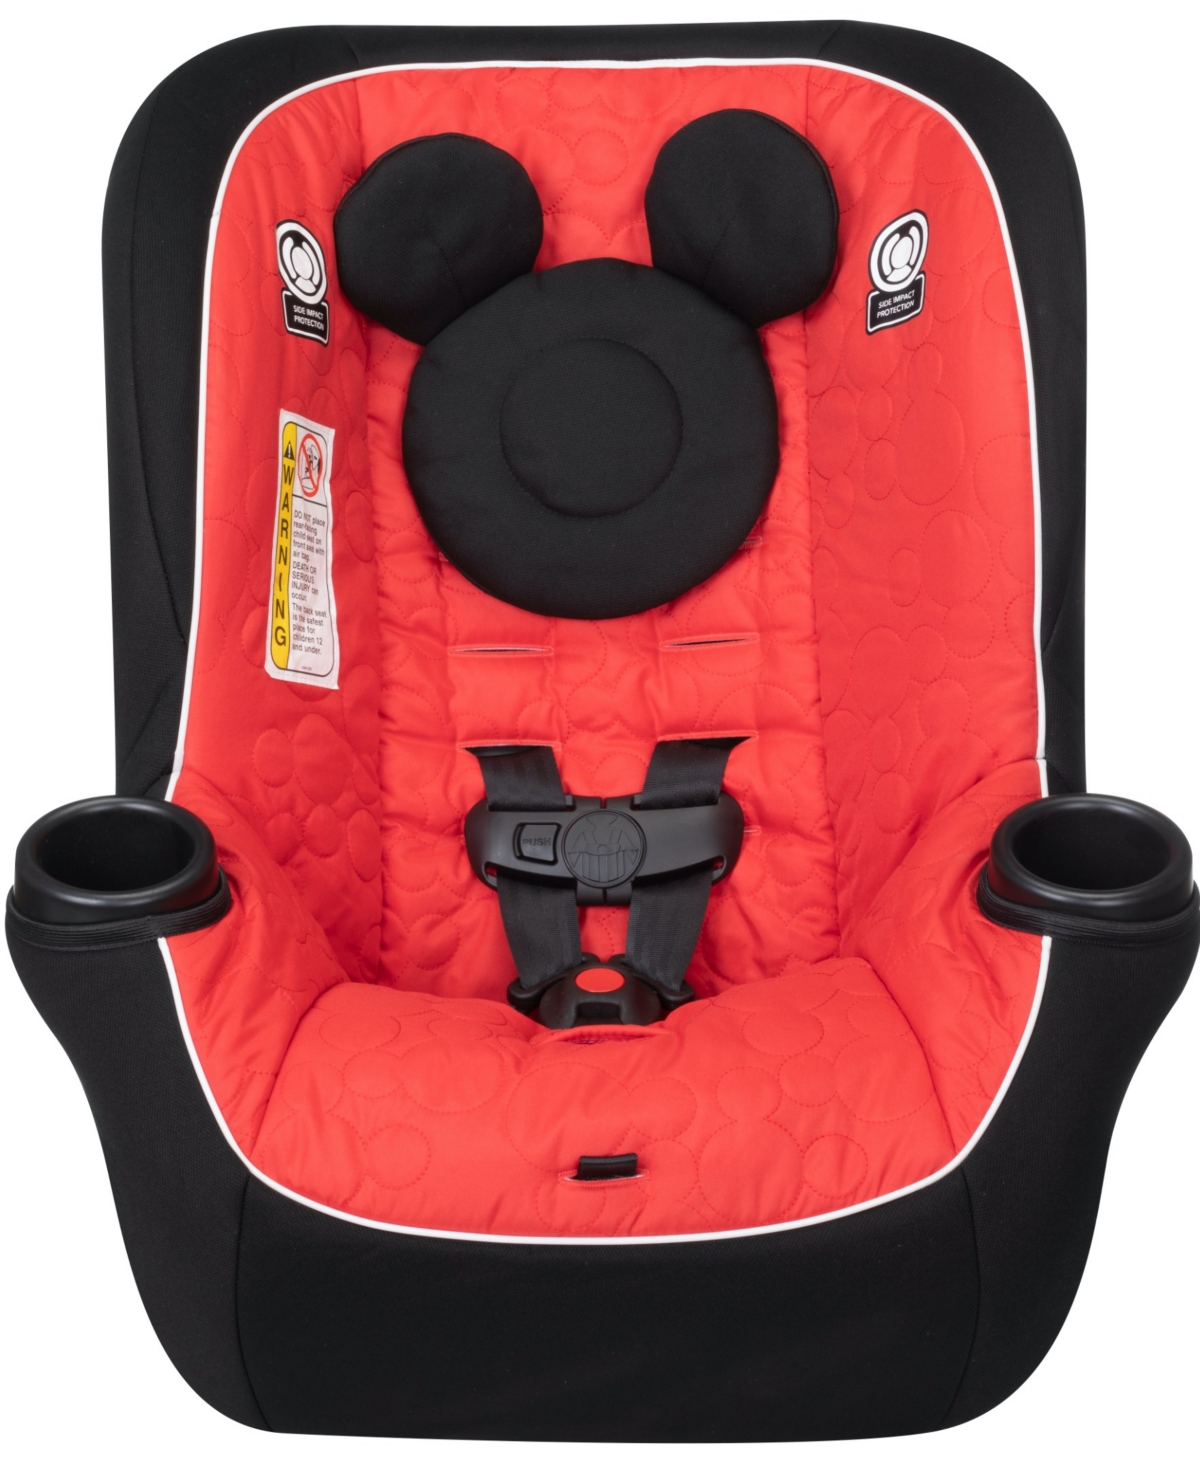 Disney Baby Onlook Convertible Car Seat In Mouseketeer Mickey